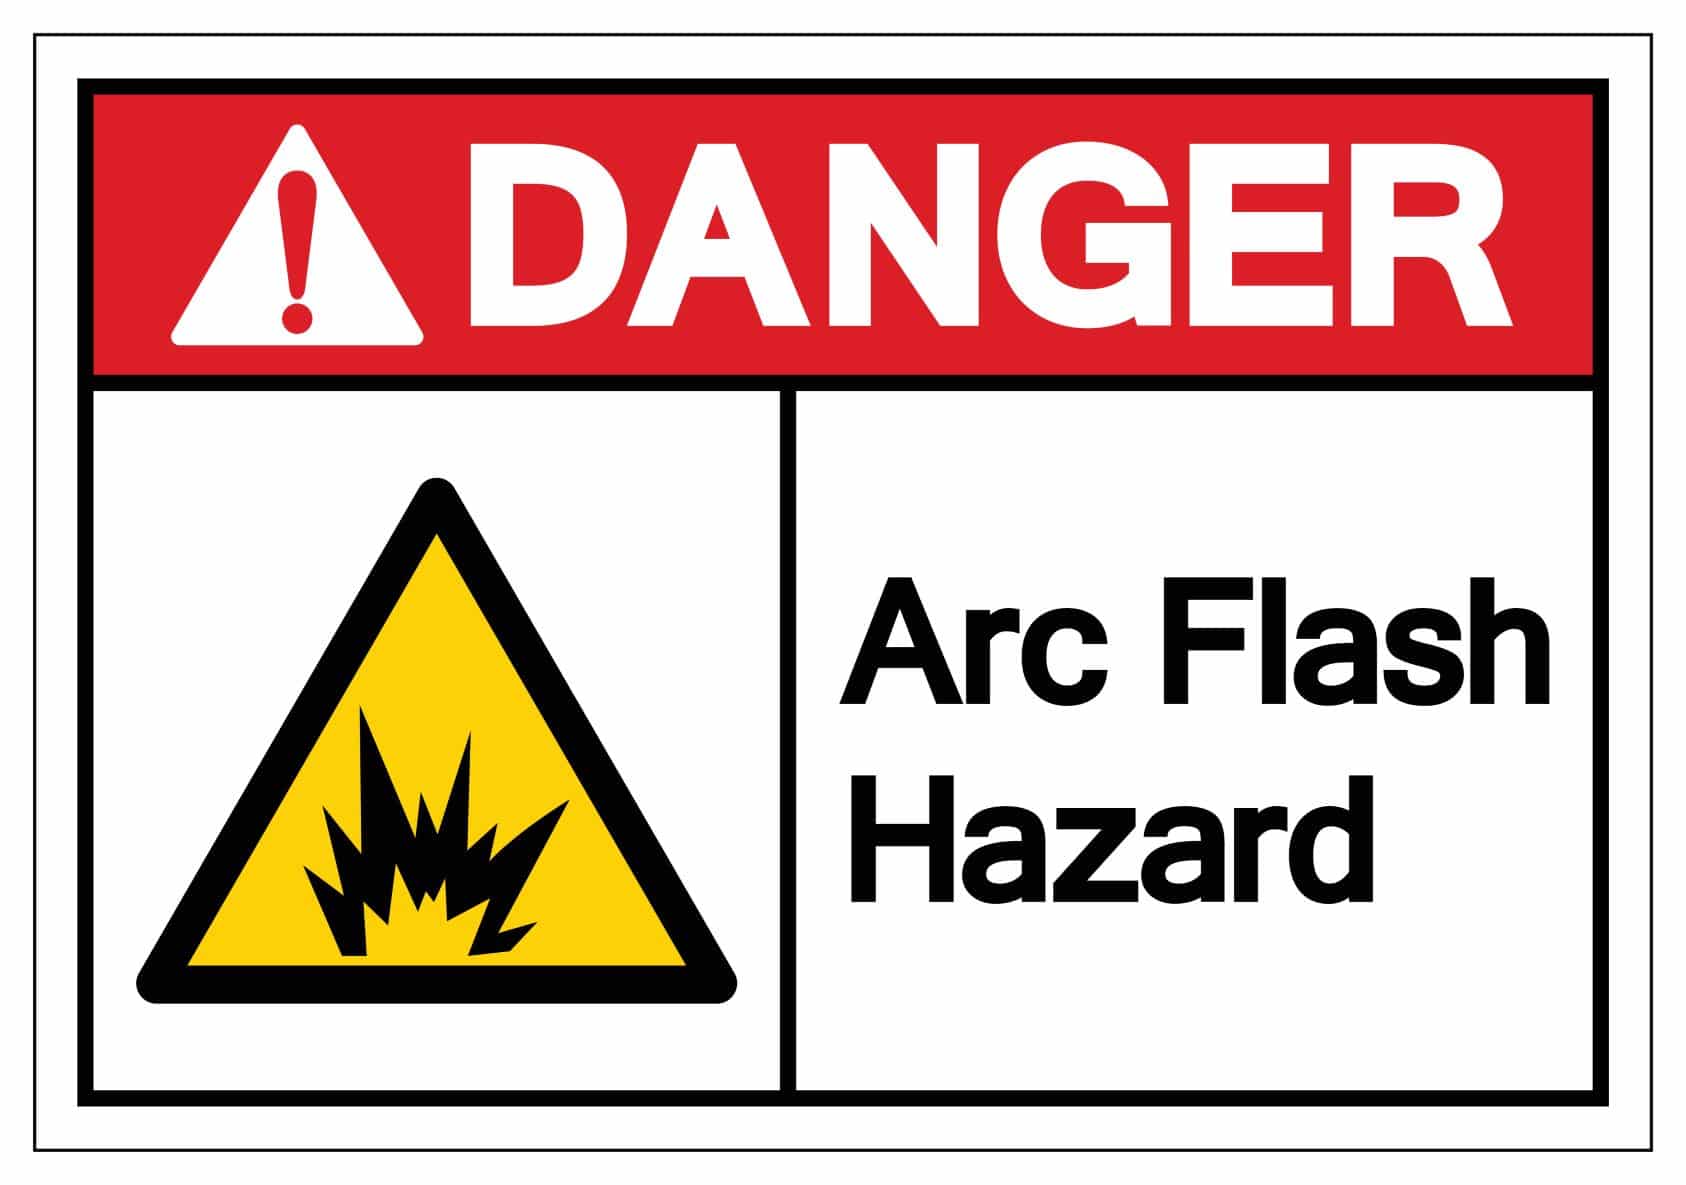 Watch “Arc Week” Episodes to Learn About Hazards of Arc Flash